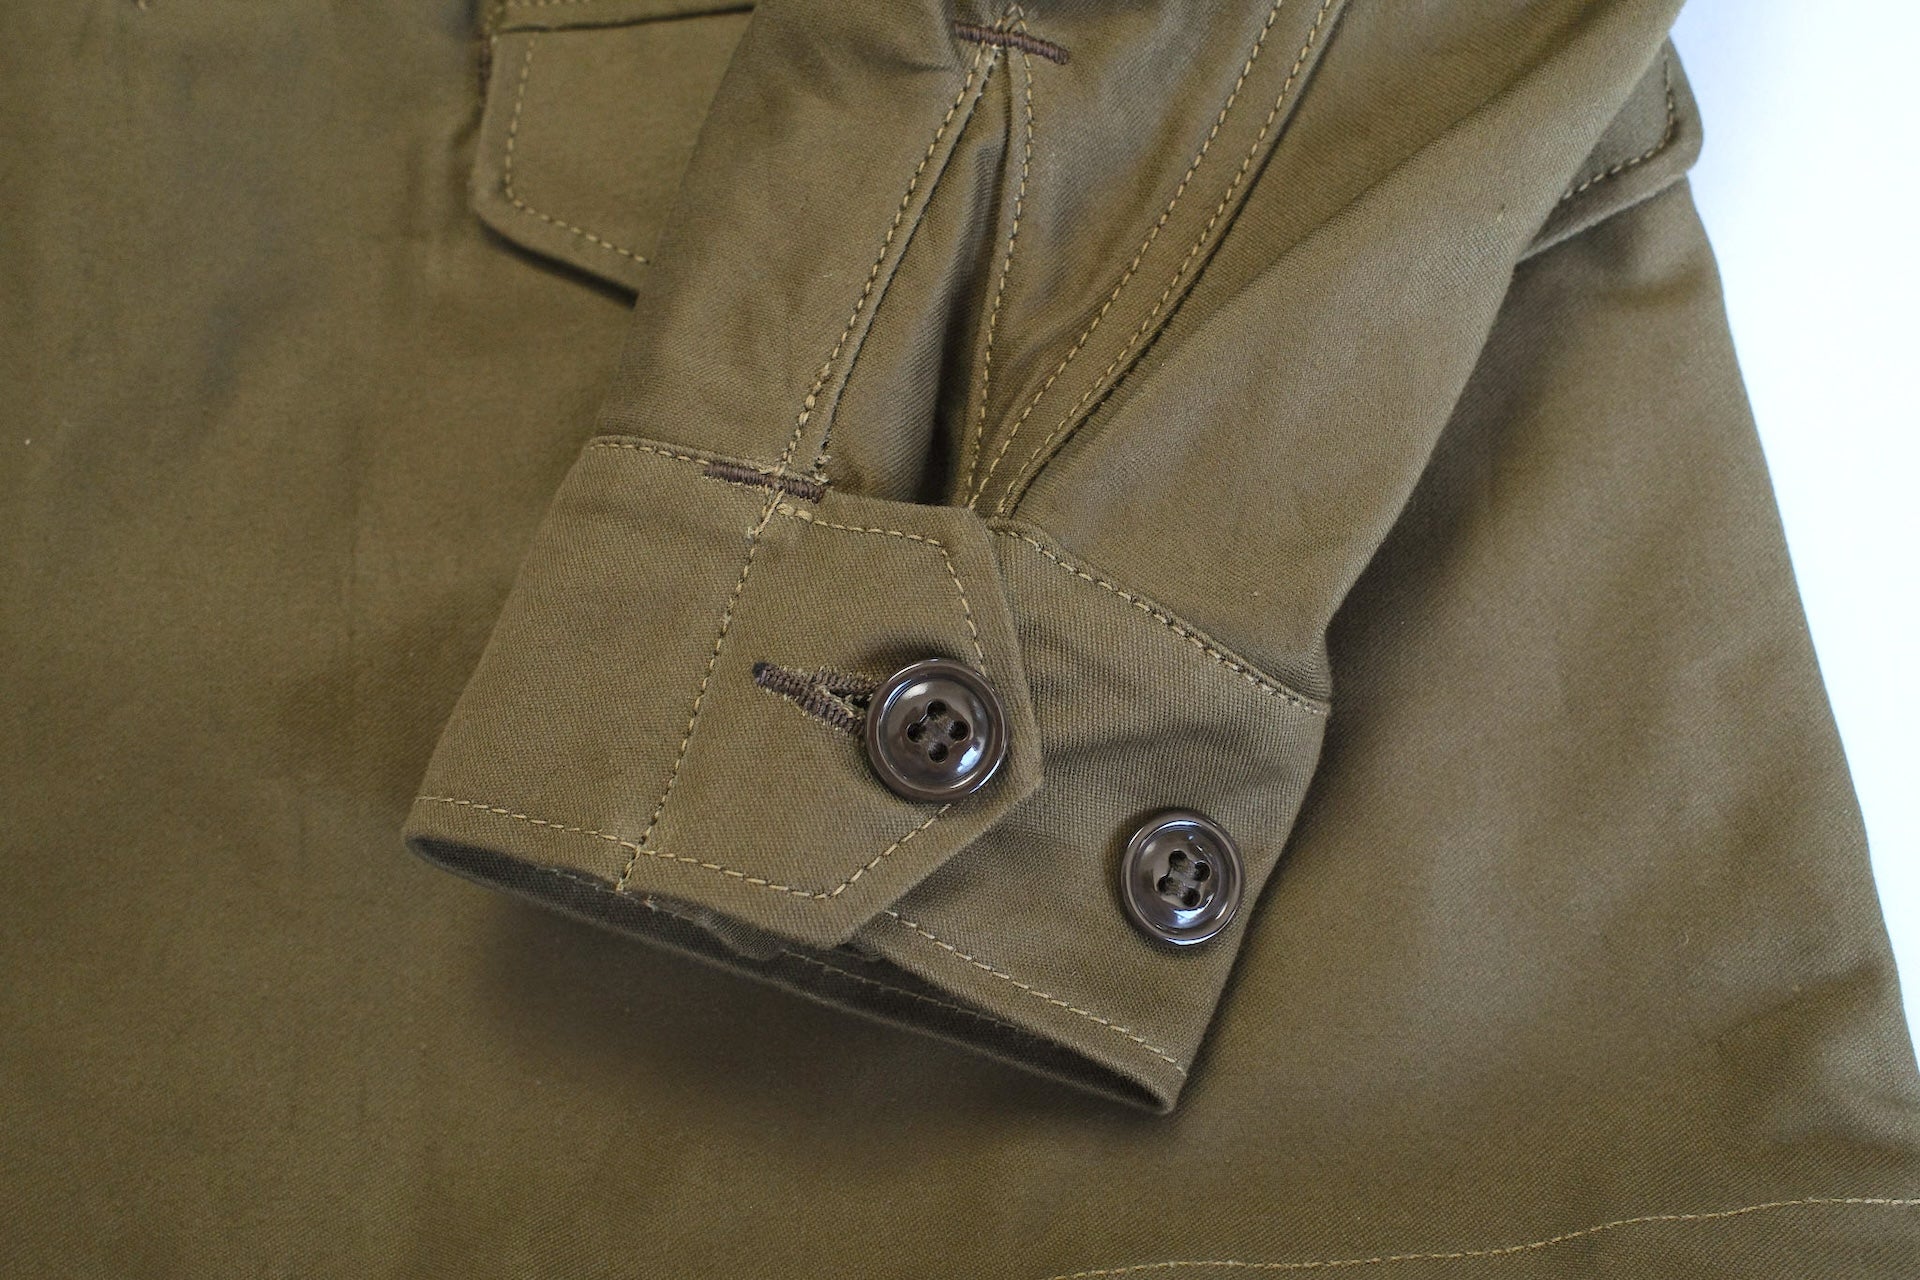 Freewheelers "M-1951" Military Back Satin Field Jacket (Olive)